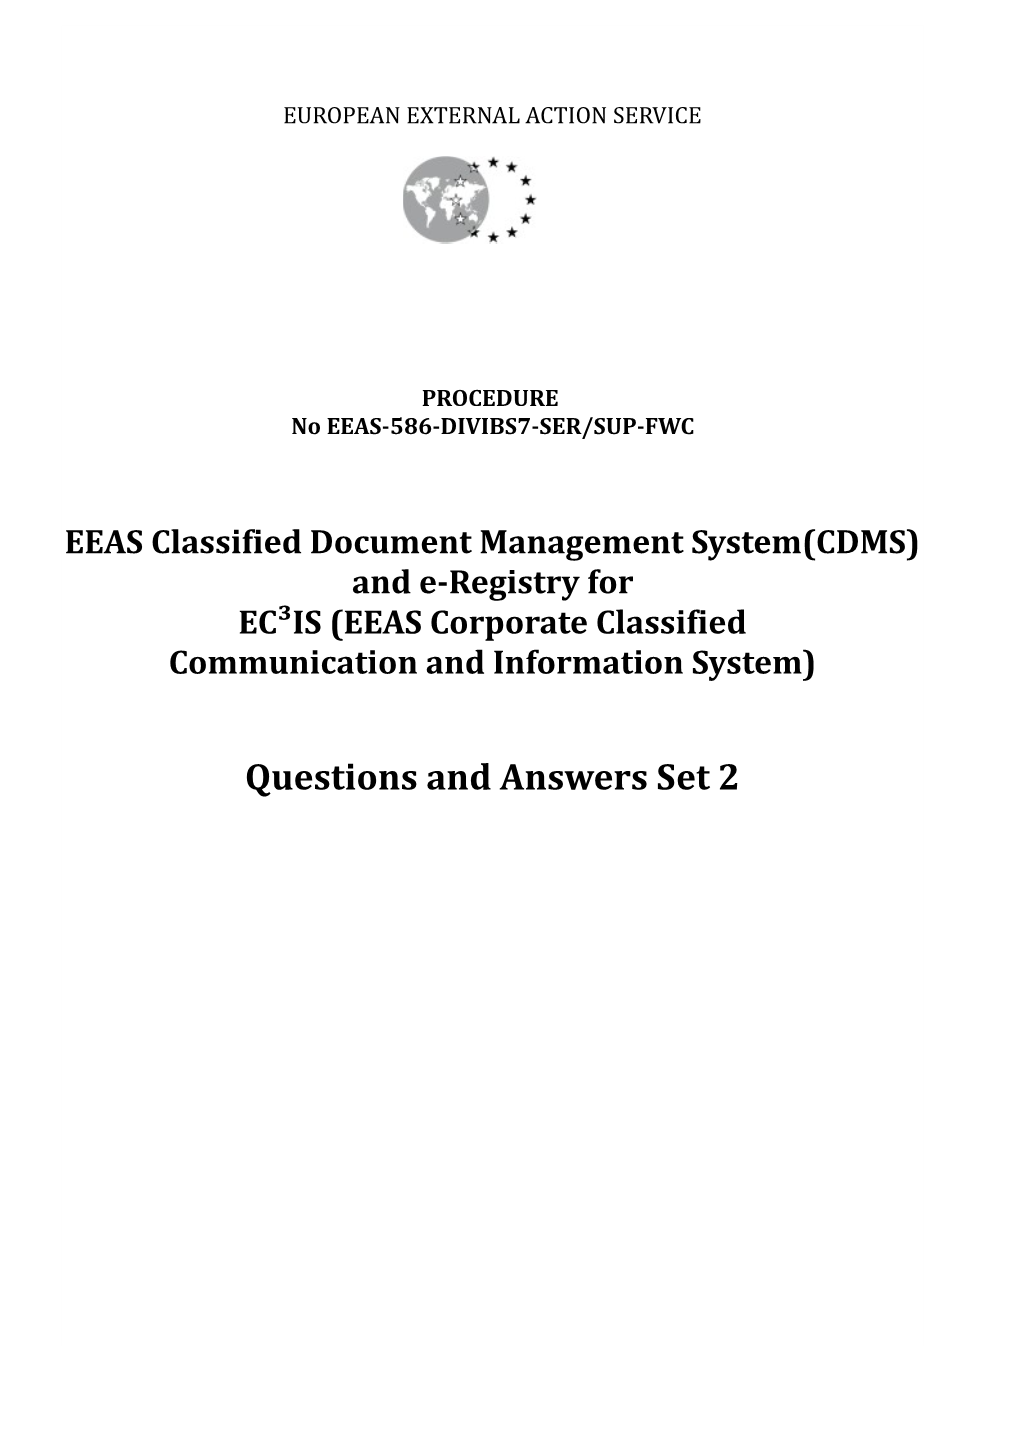 EEAS Classified Documentmanagementsystem(CDMS)